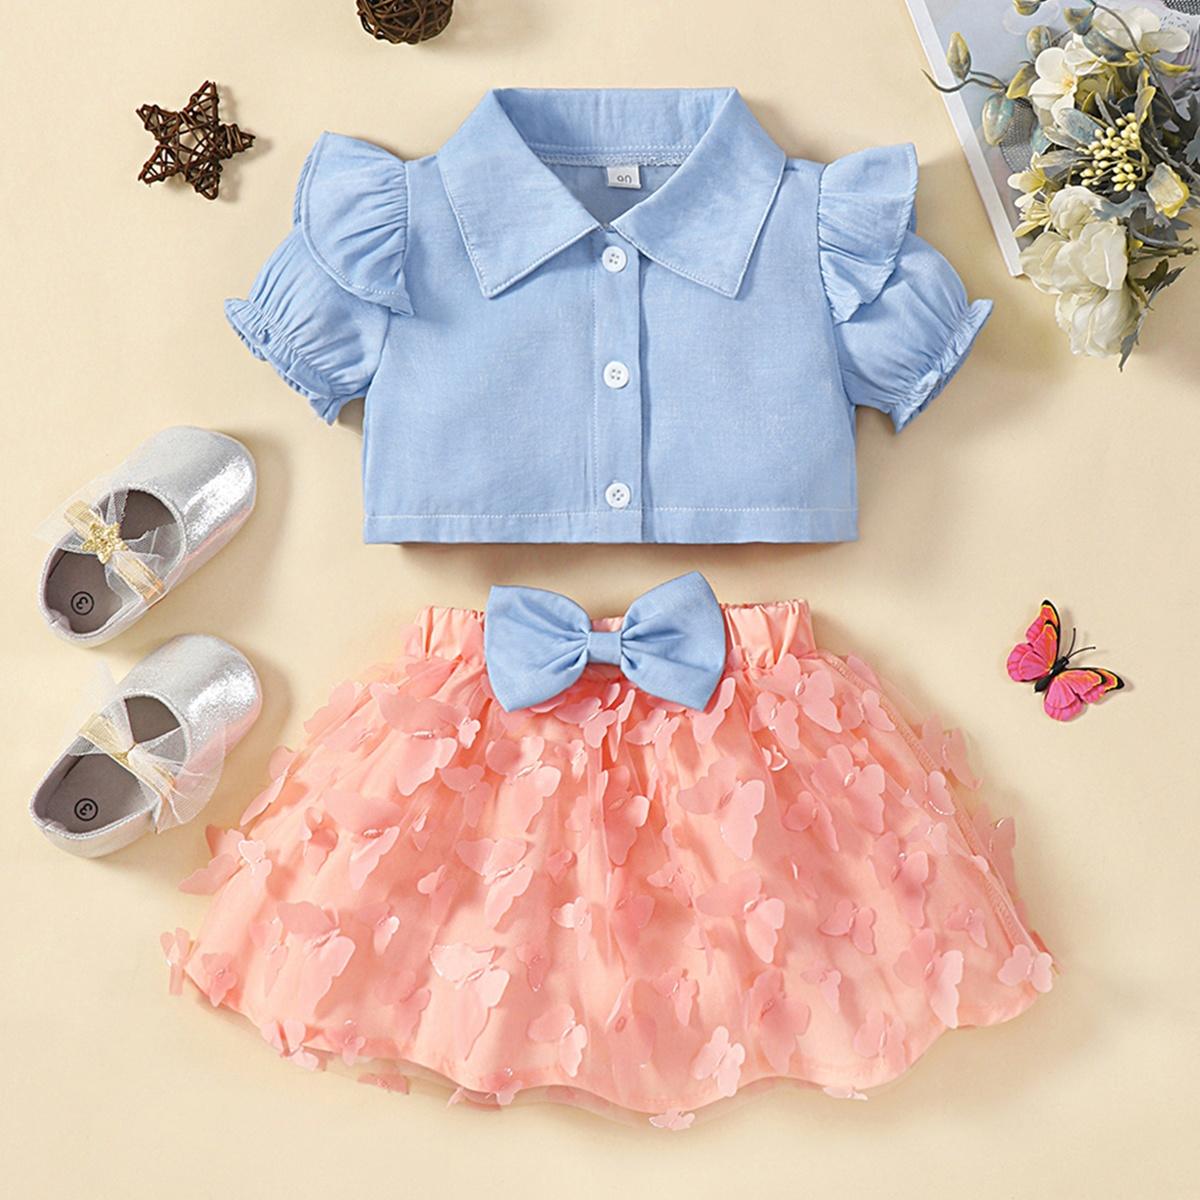 hibobi Baby Girl Summer Clothing Sets Baby Girls Clothes Shirt Top +Tutu Skirts 2pcs Outfits Sets 0-6T